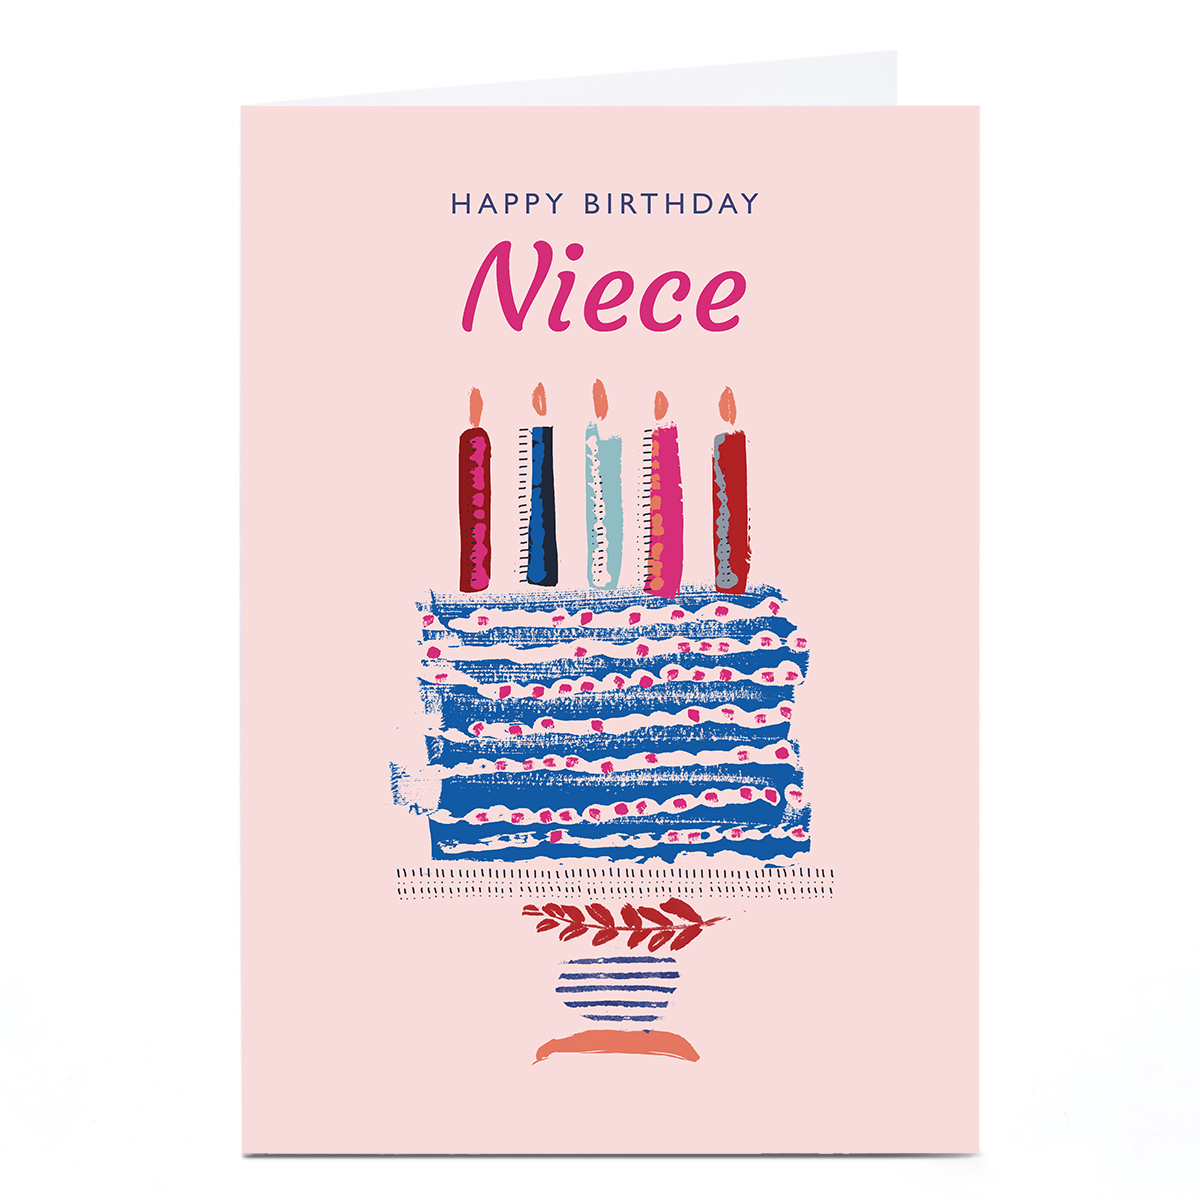 Personalised Rebecca Prinn Birthday Card - Cake & Candles